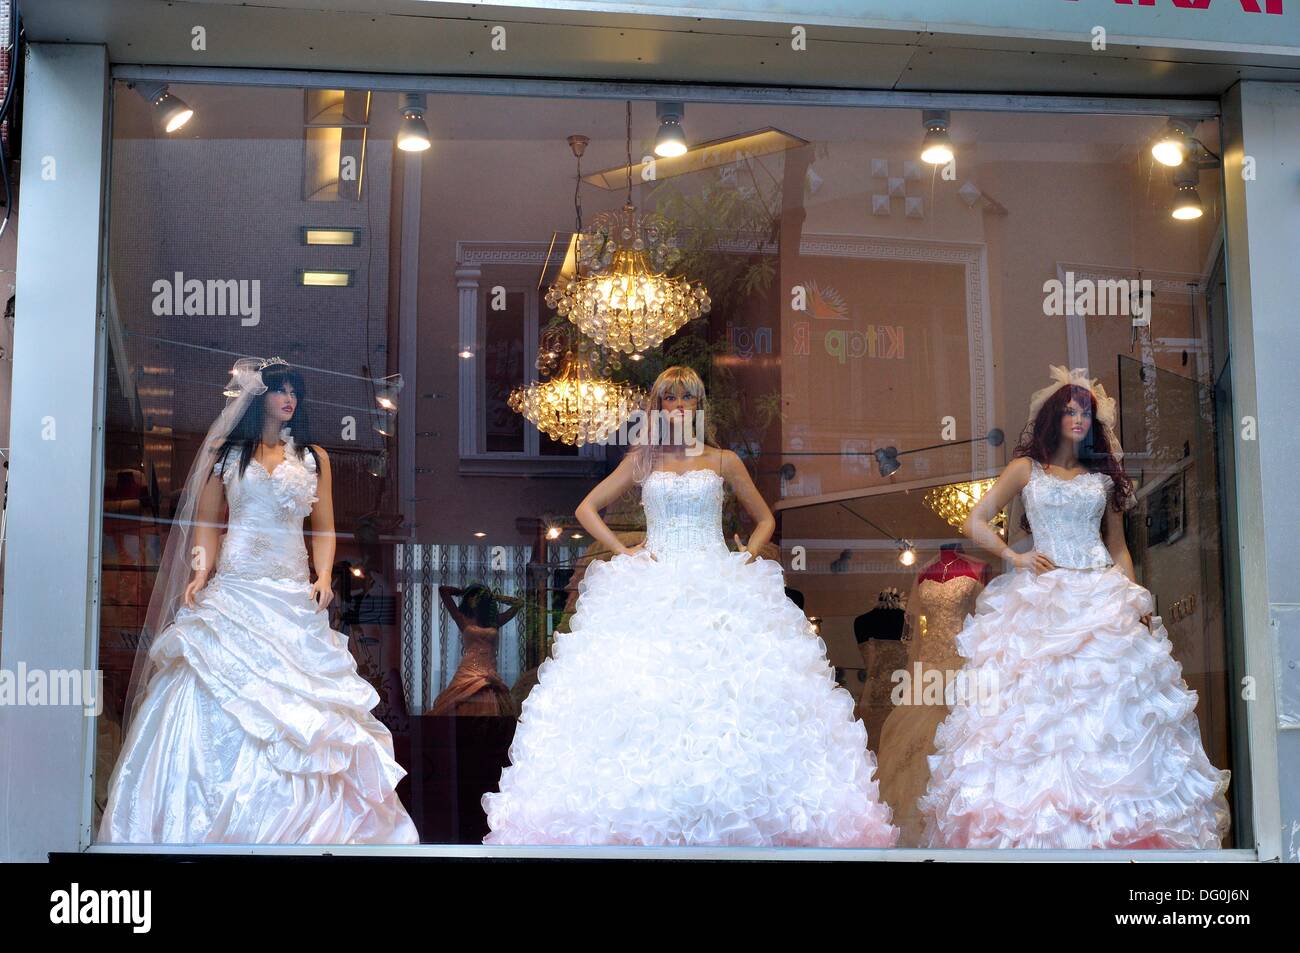 Turkey, Istanbul, View of Mannequin Wearing Wedding Dress, Through ...